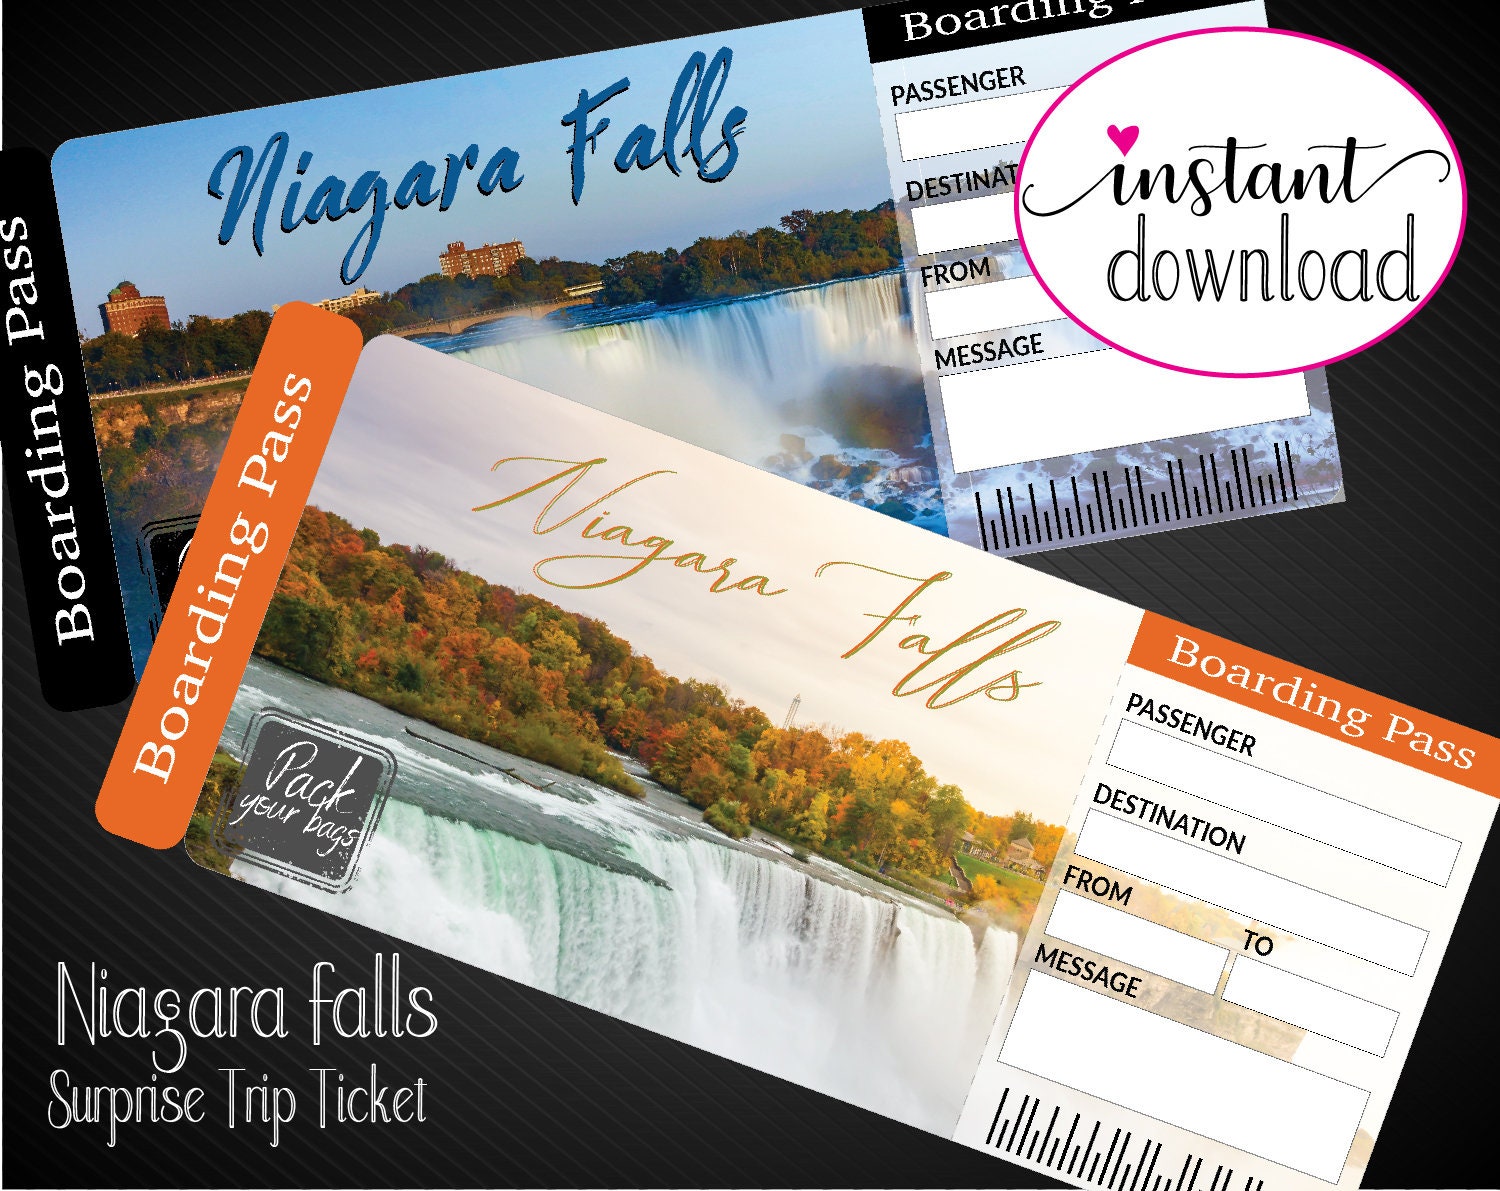 niagara falls cruise tickets online